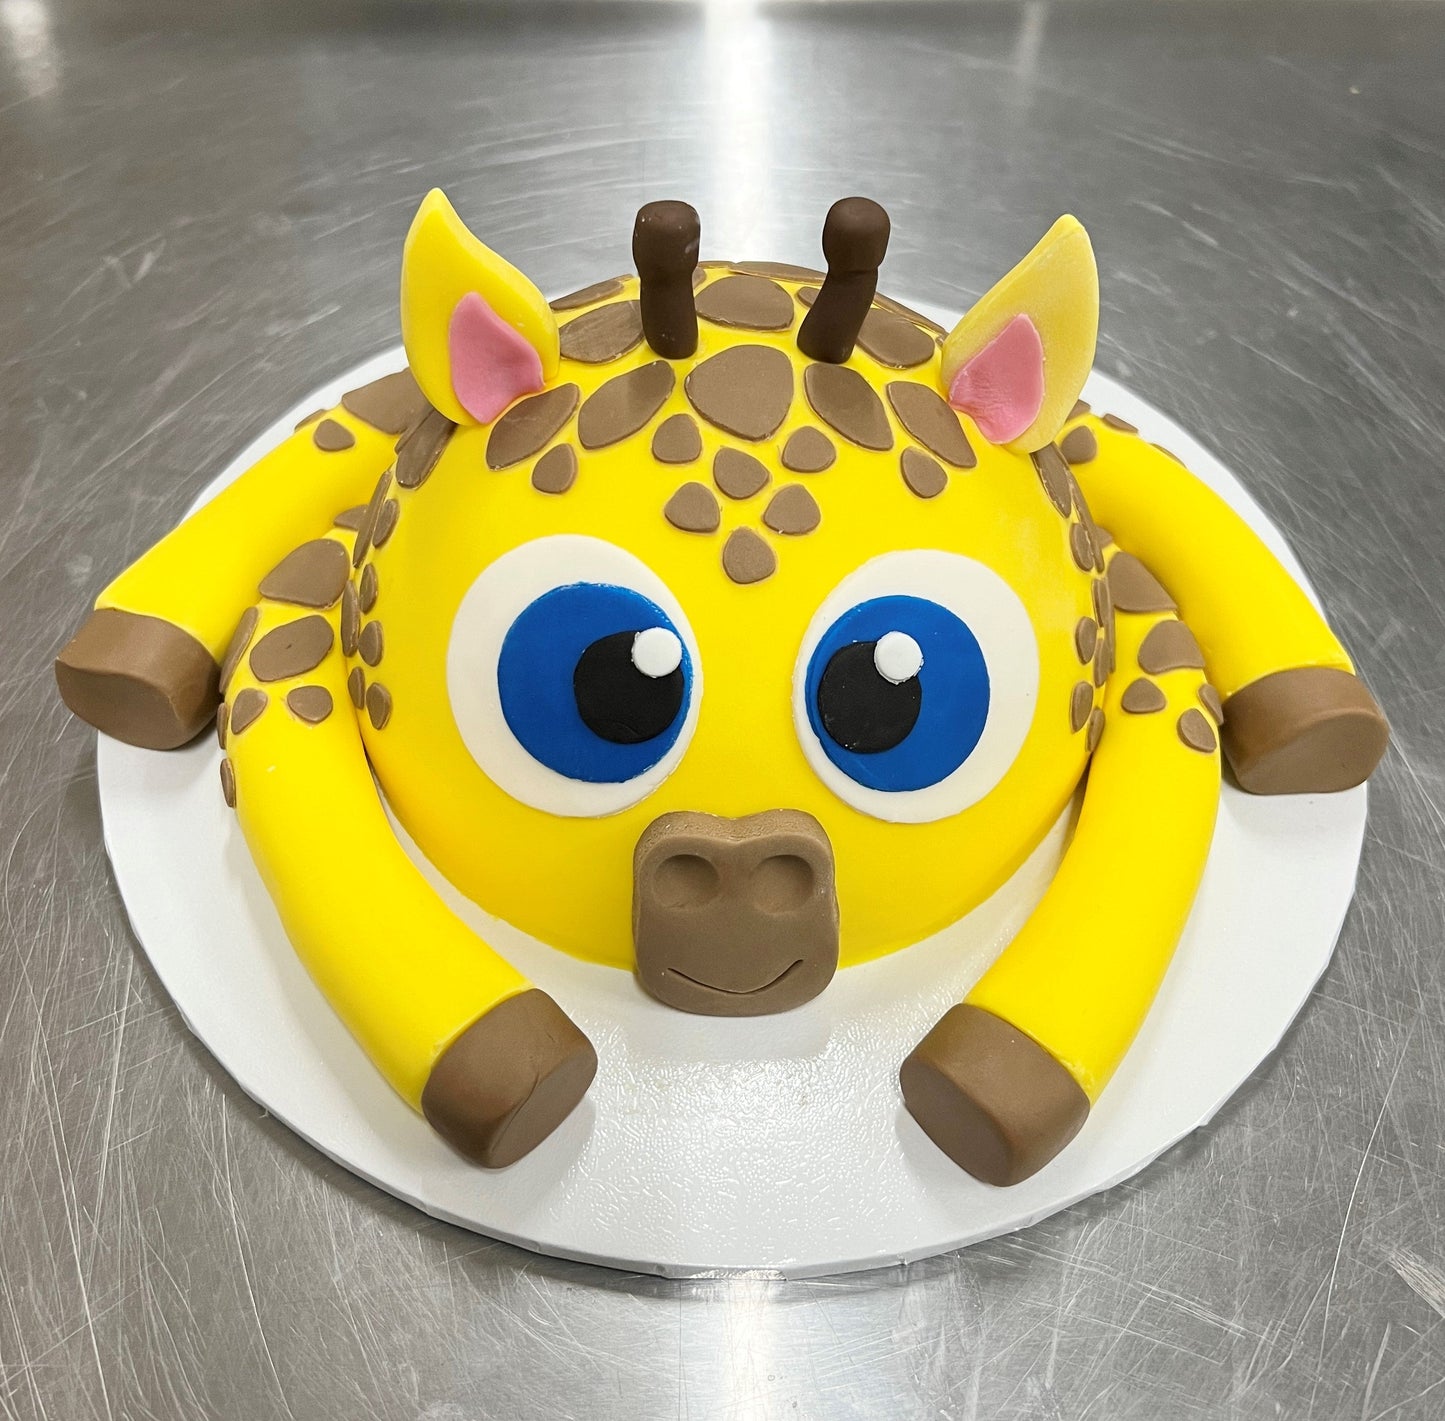 Kids Cake Decorating Class - Giraffe- Wednesday 24th April 1pm-3pm